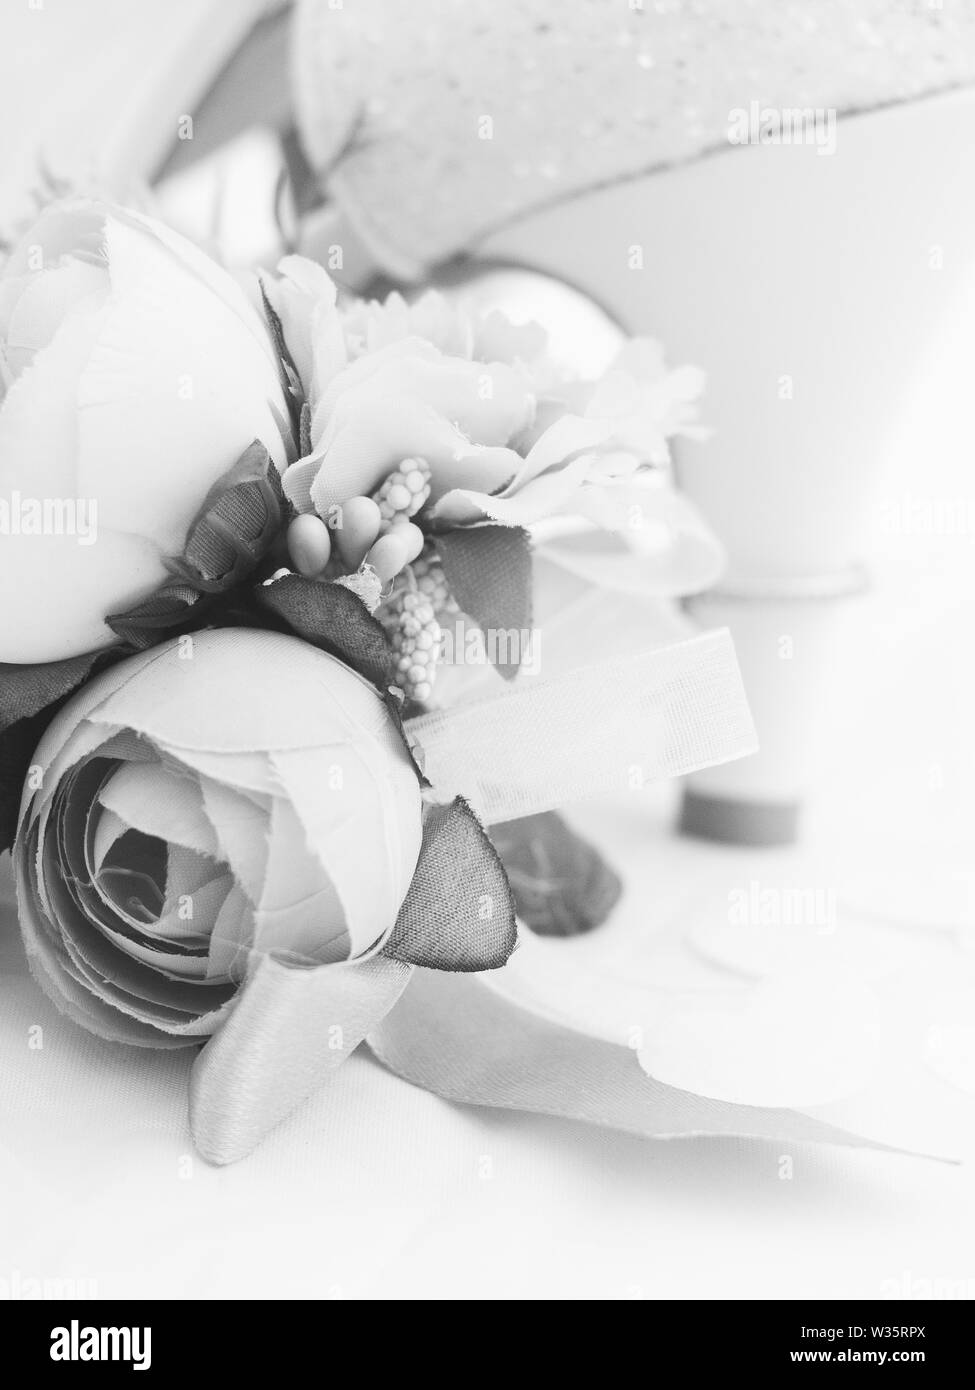 wedding dress, flowers shoes, earrings Stock Photo